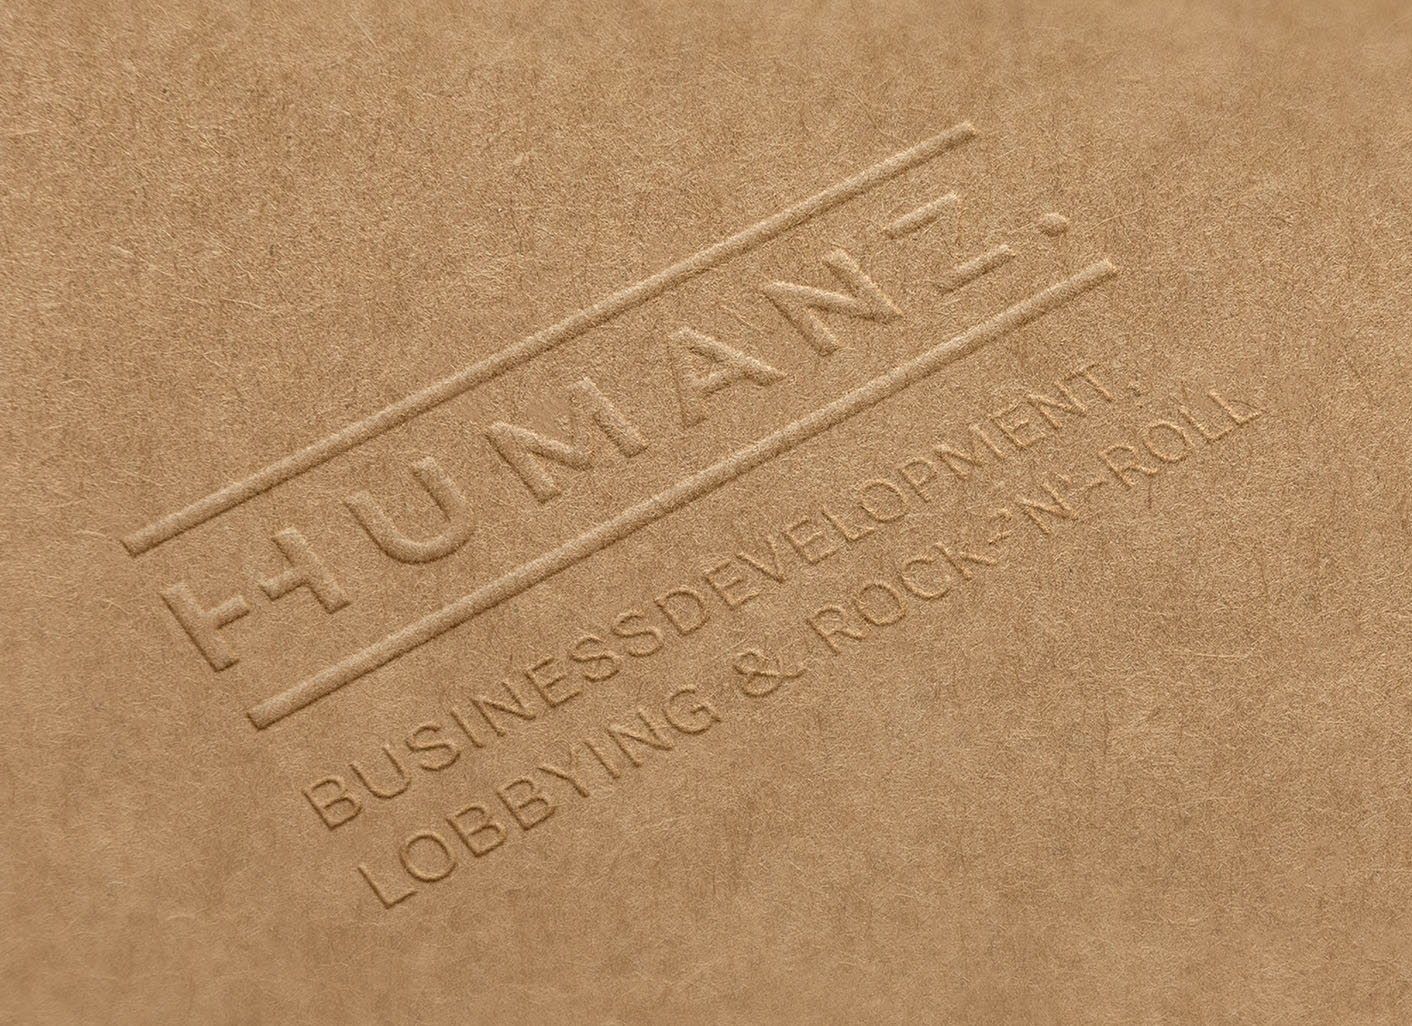 Humanz_branding_logo